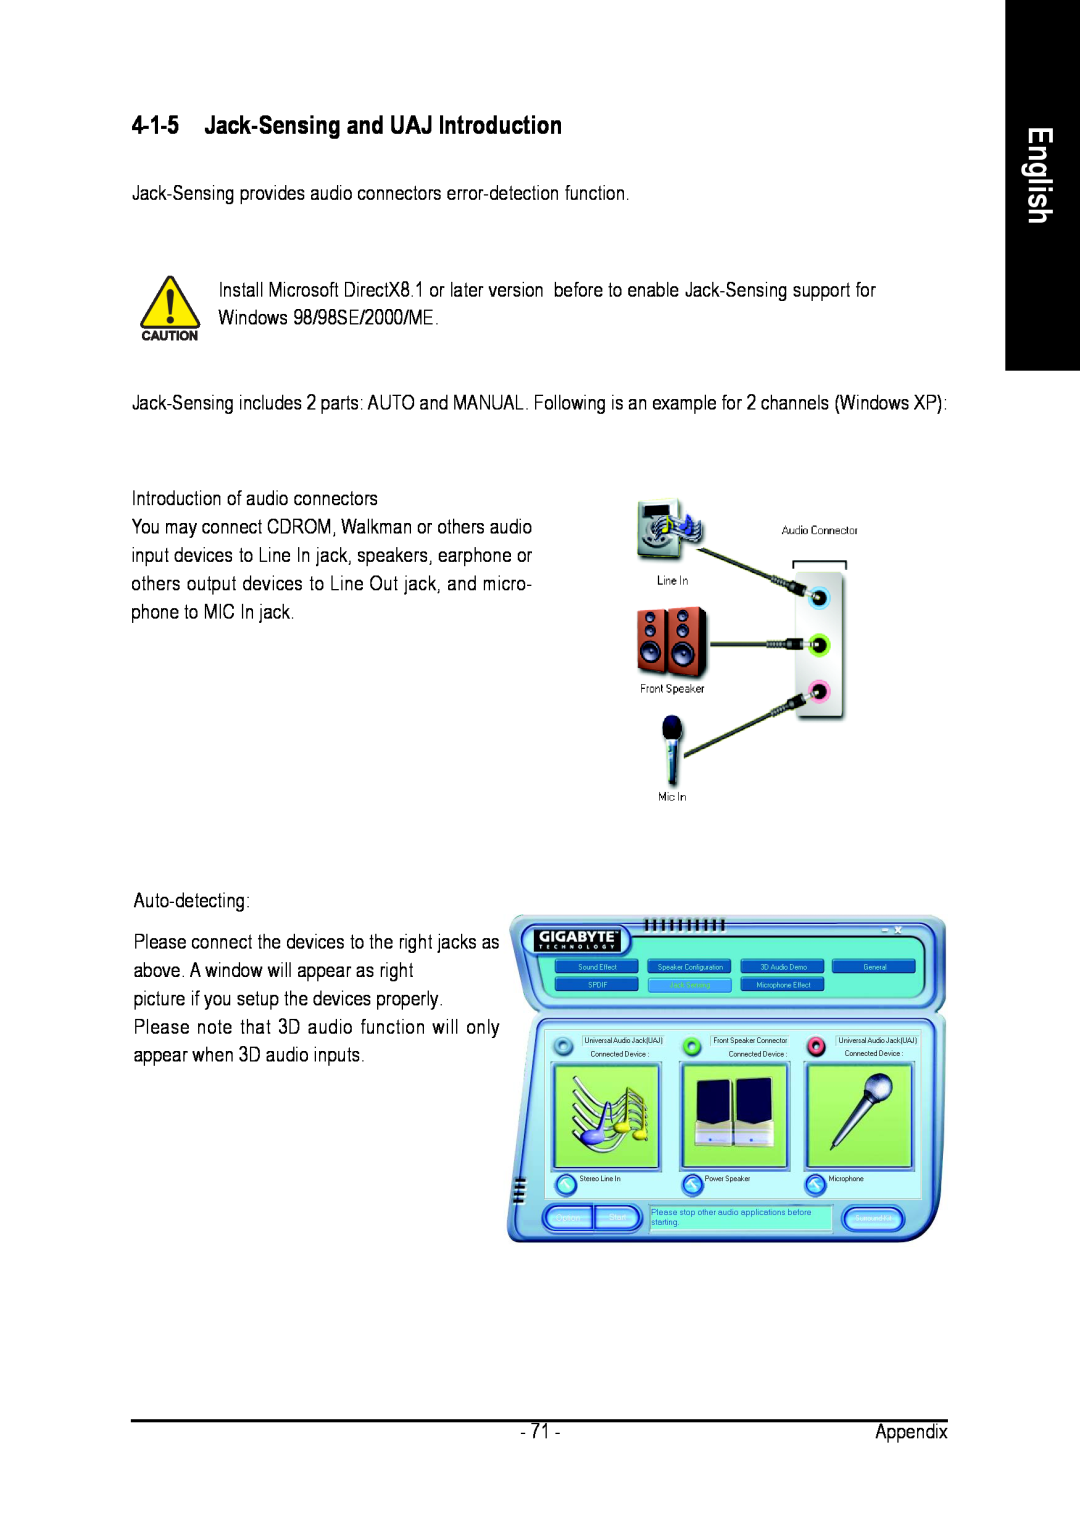 Intel GA-8I915PL-G user manual Jack-Sensing and UAJ Introduction, English, Introduction of audio connectors, Auto-detecting 